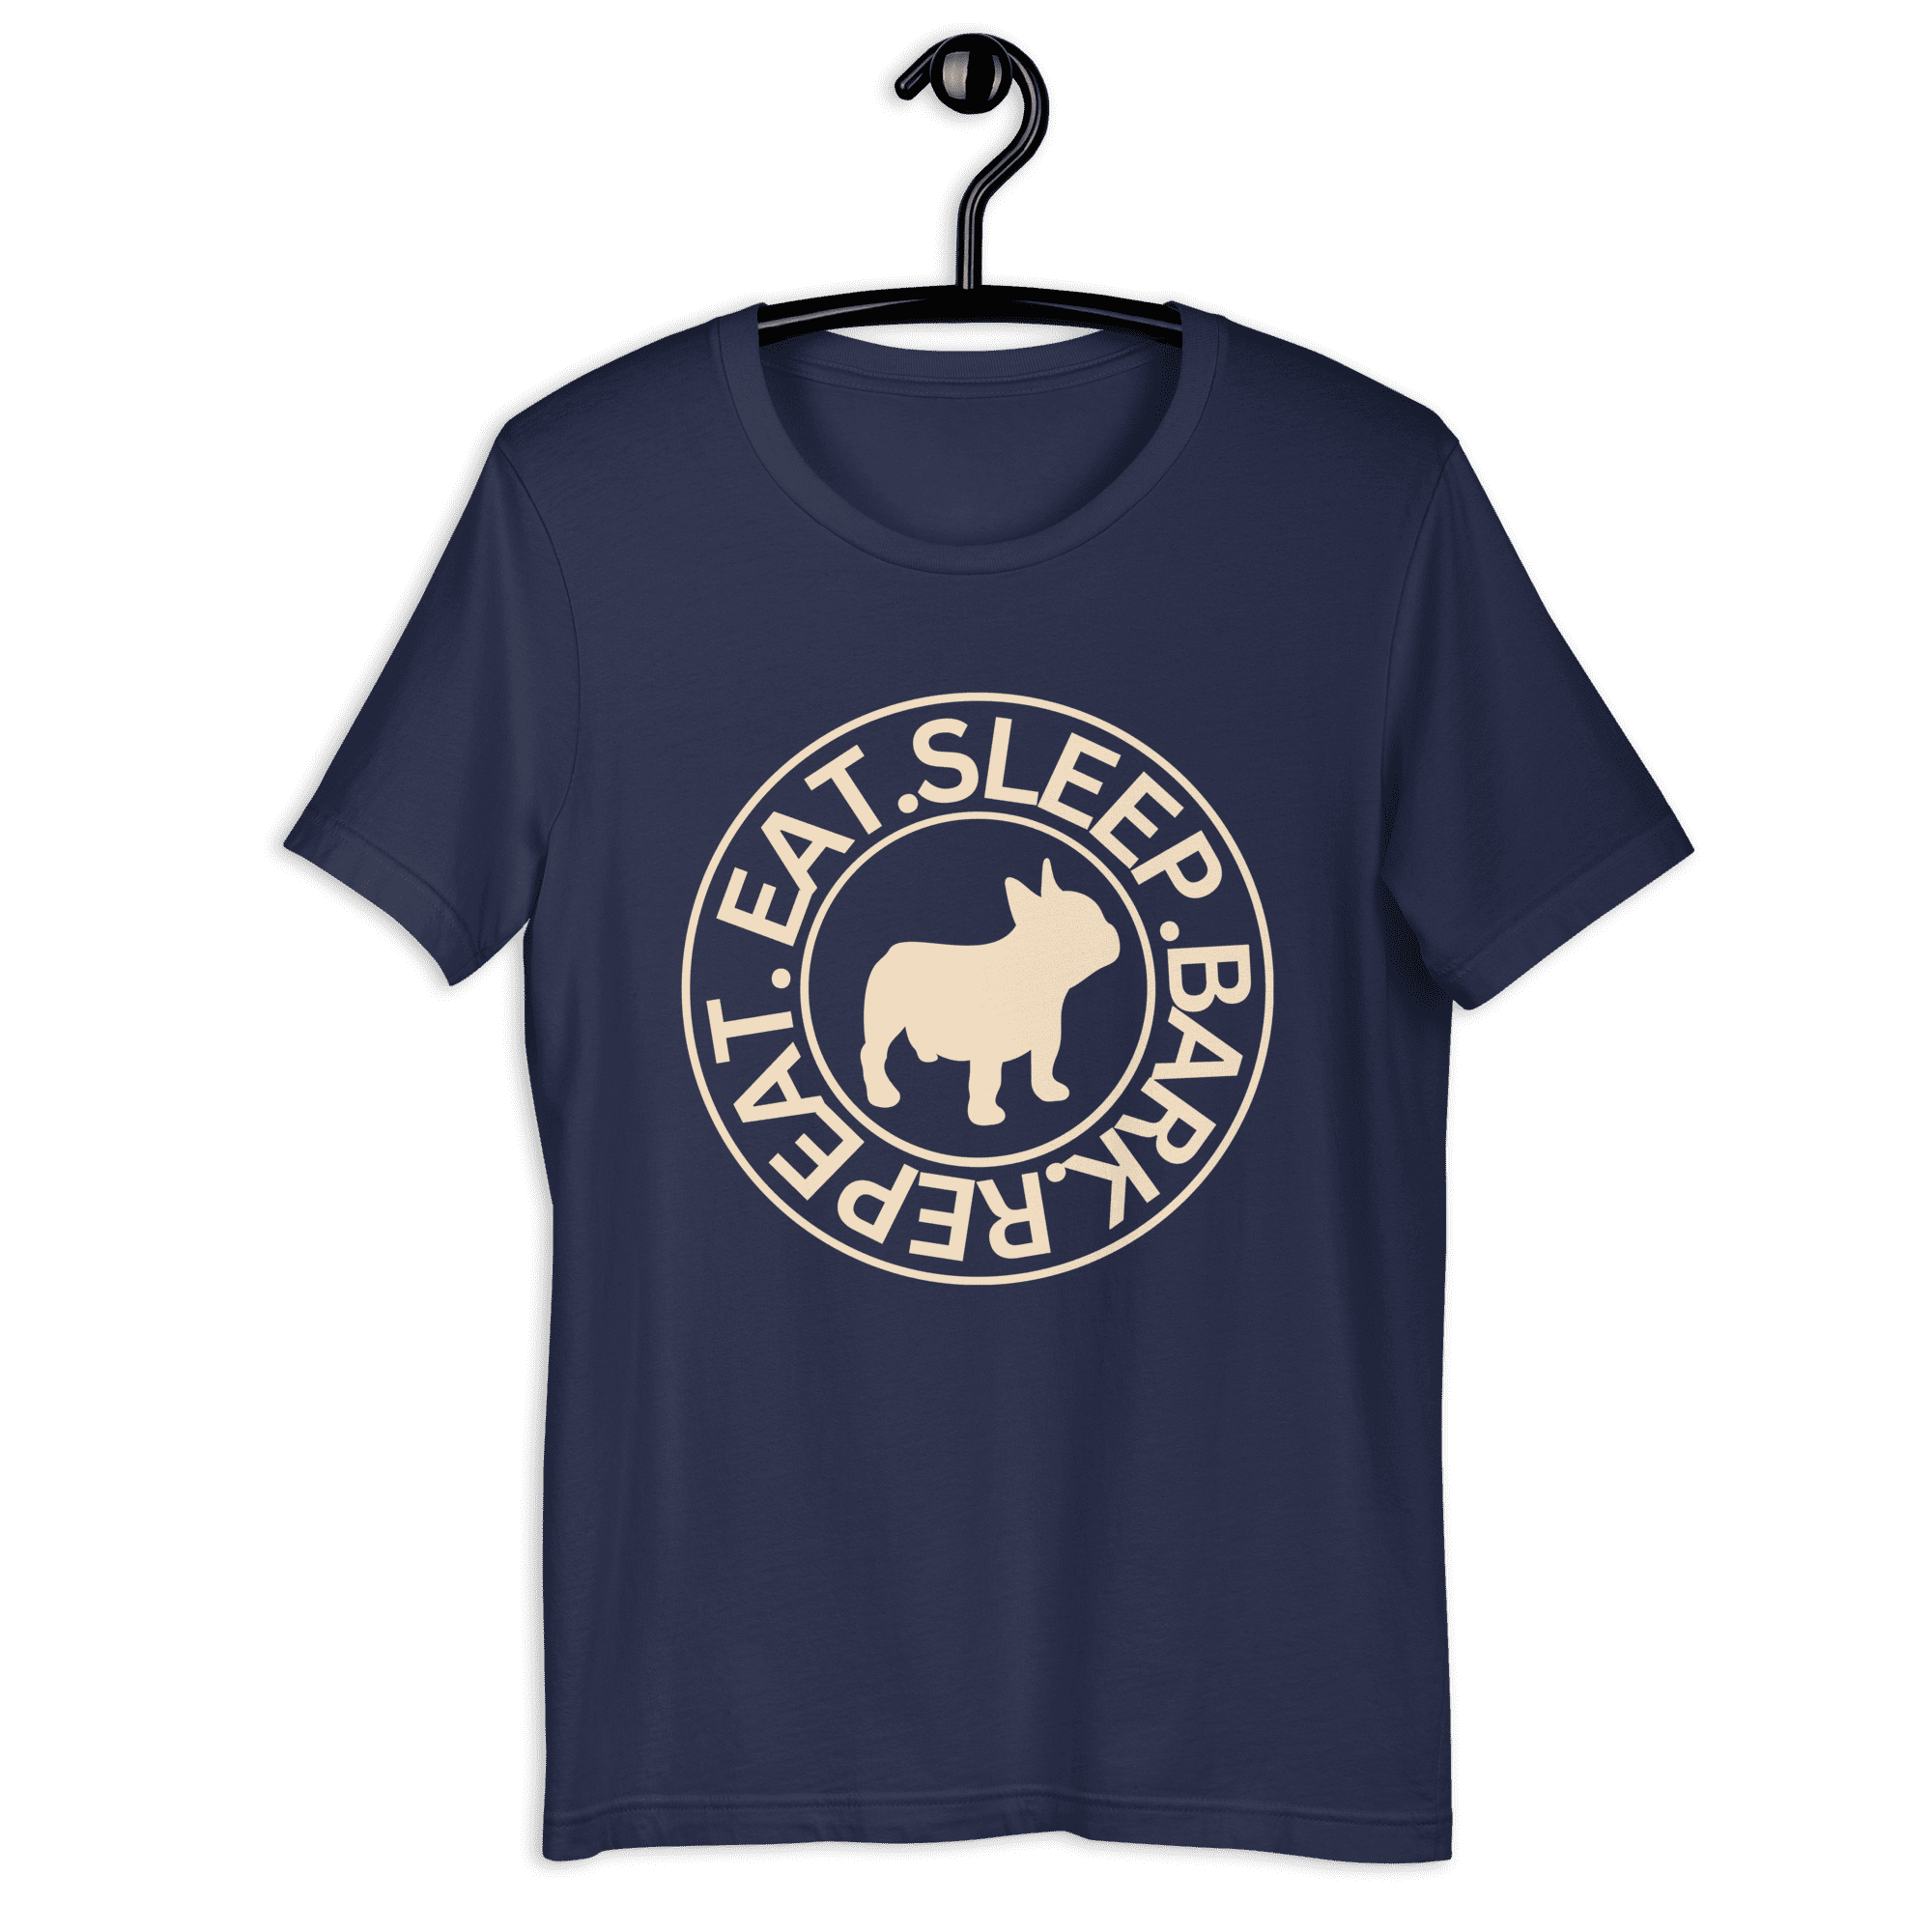 The "Eat Sleep Bark Repeat" French Bulldog Unisex T-Shirt. Navy Blue